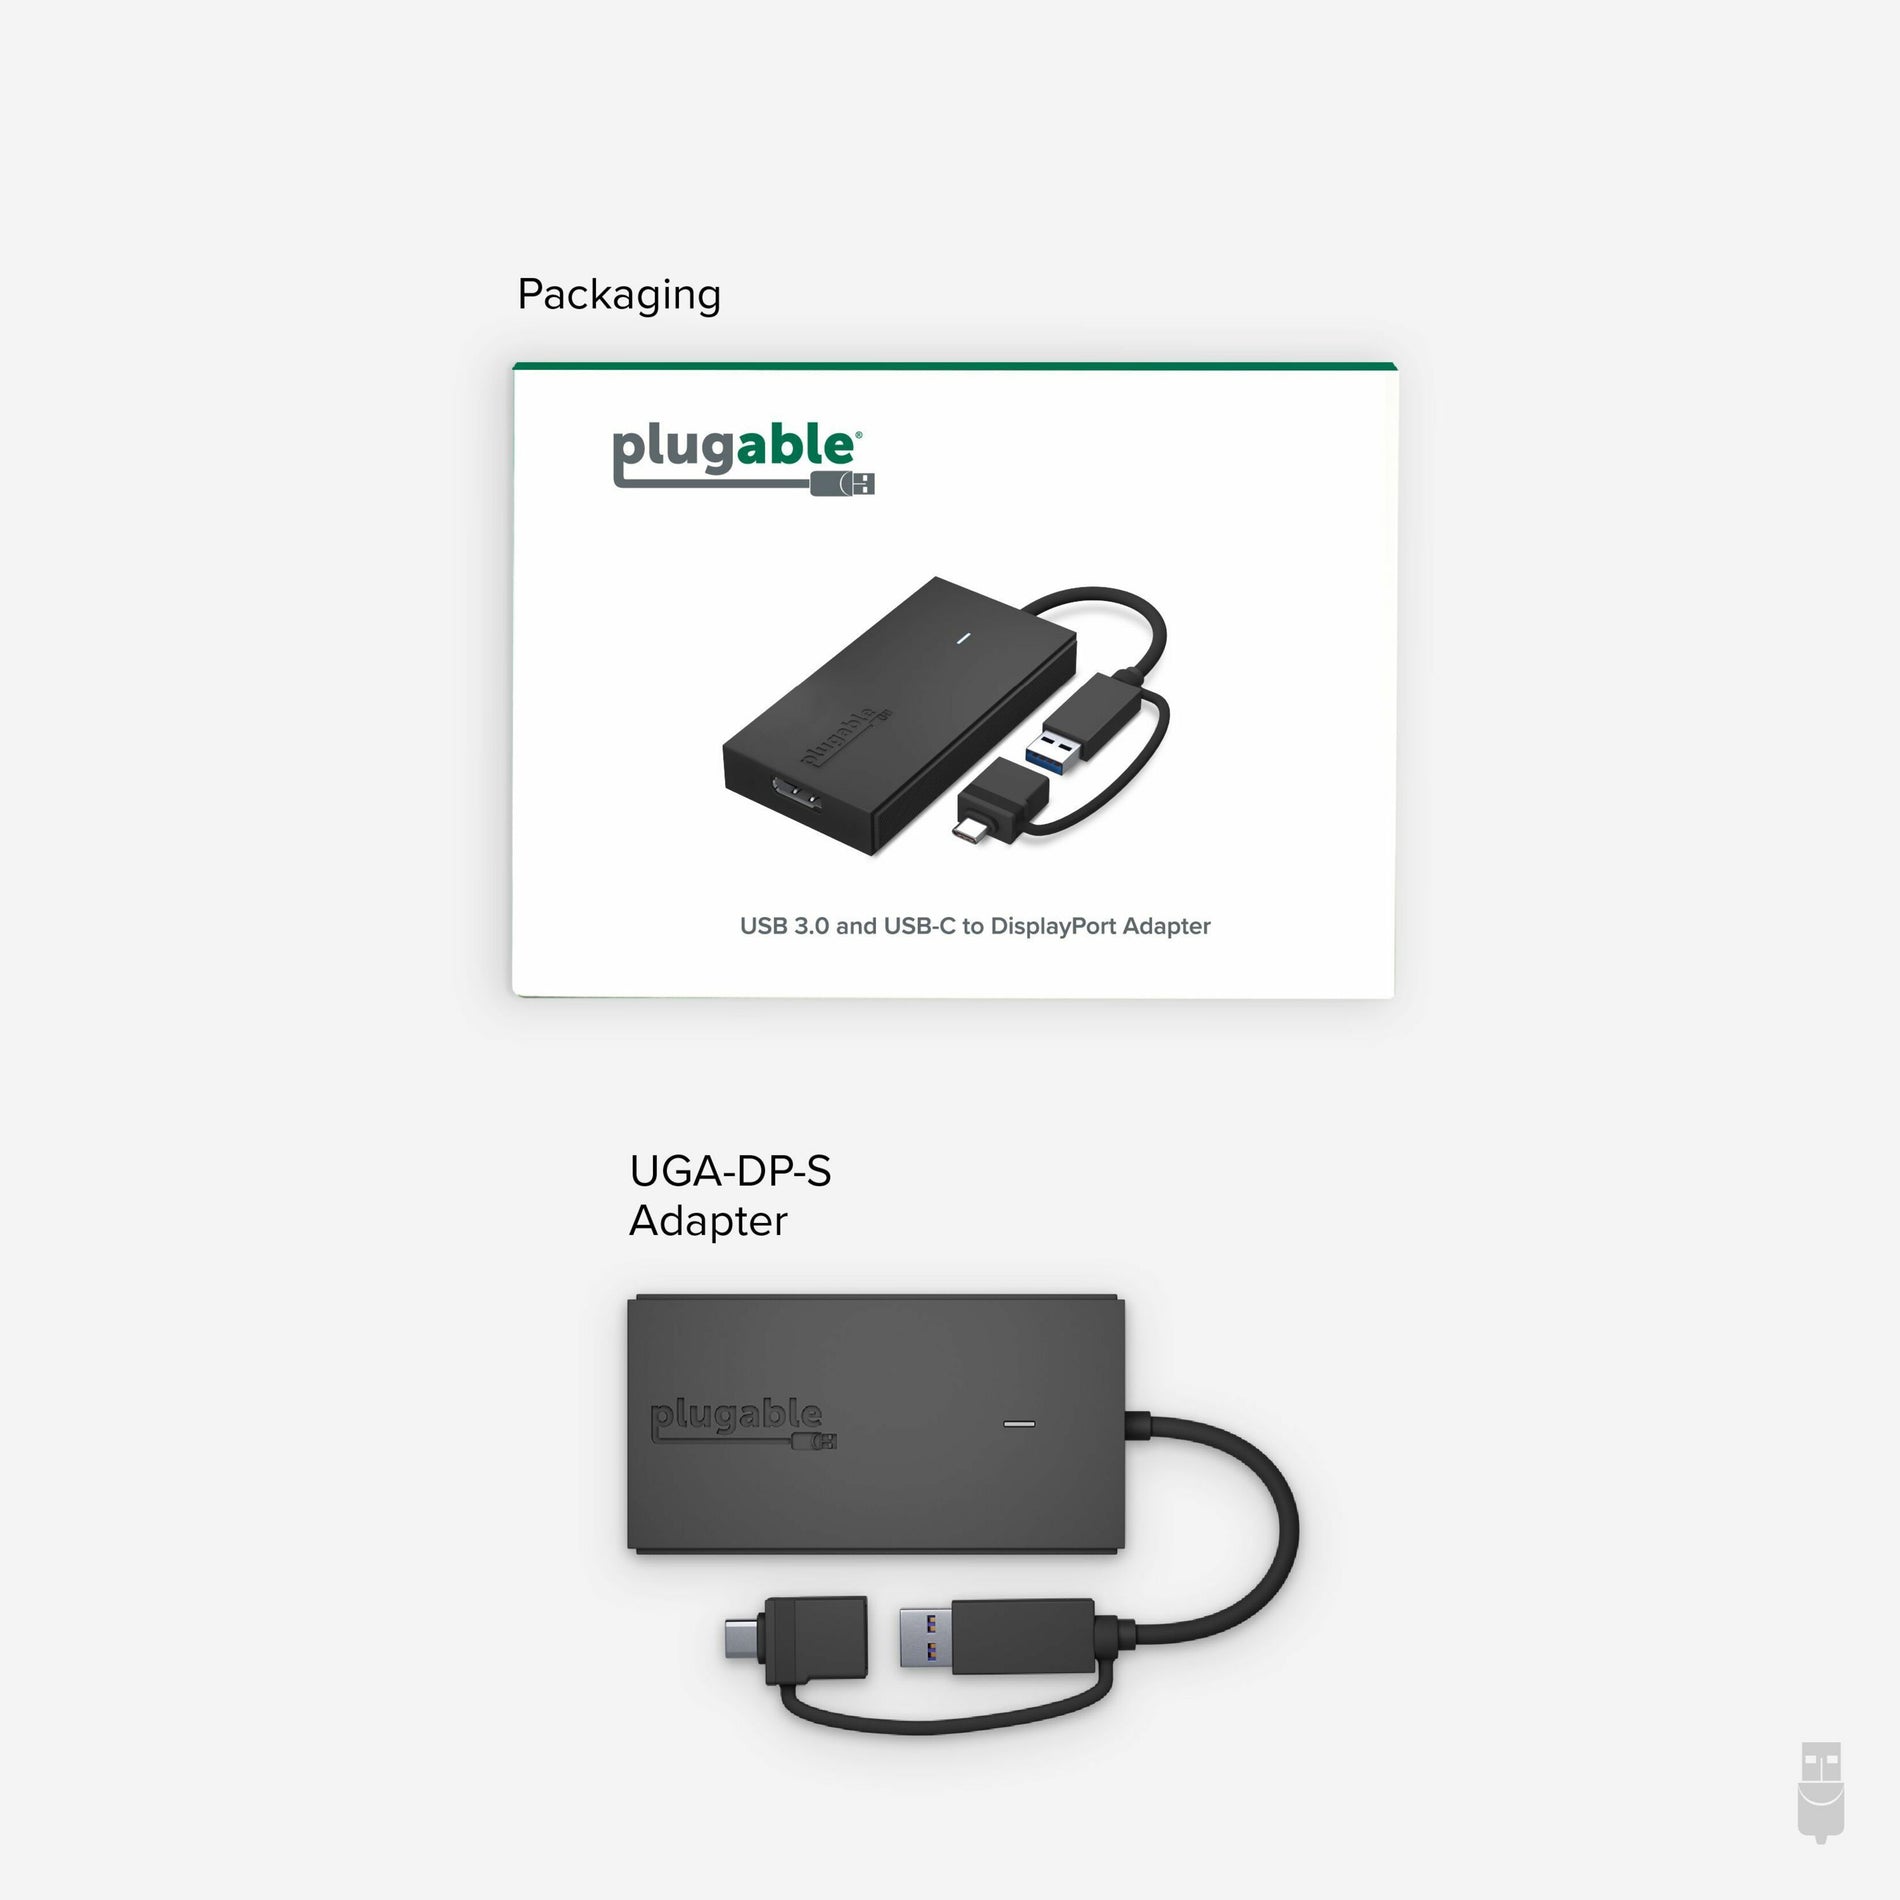 普拉格波 UGA-DP-S DisplayPort/USB-C/USB 音视频适配器，HDCP 充电，支持 1920 x 1080 分辨率  品牌名称：普拉格波  普拉格波 UGA-DP-S DisplayPort/USB-C/USB 音视频适配器，HDCP 充电，支持 1920 x 1080 分辨率